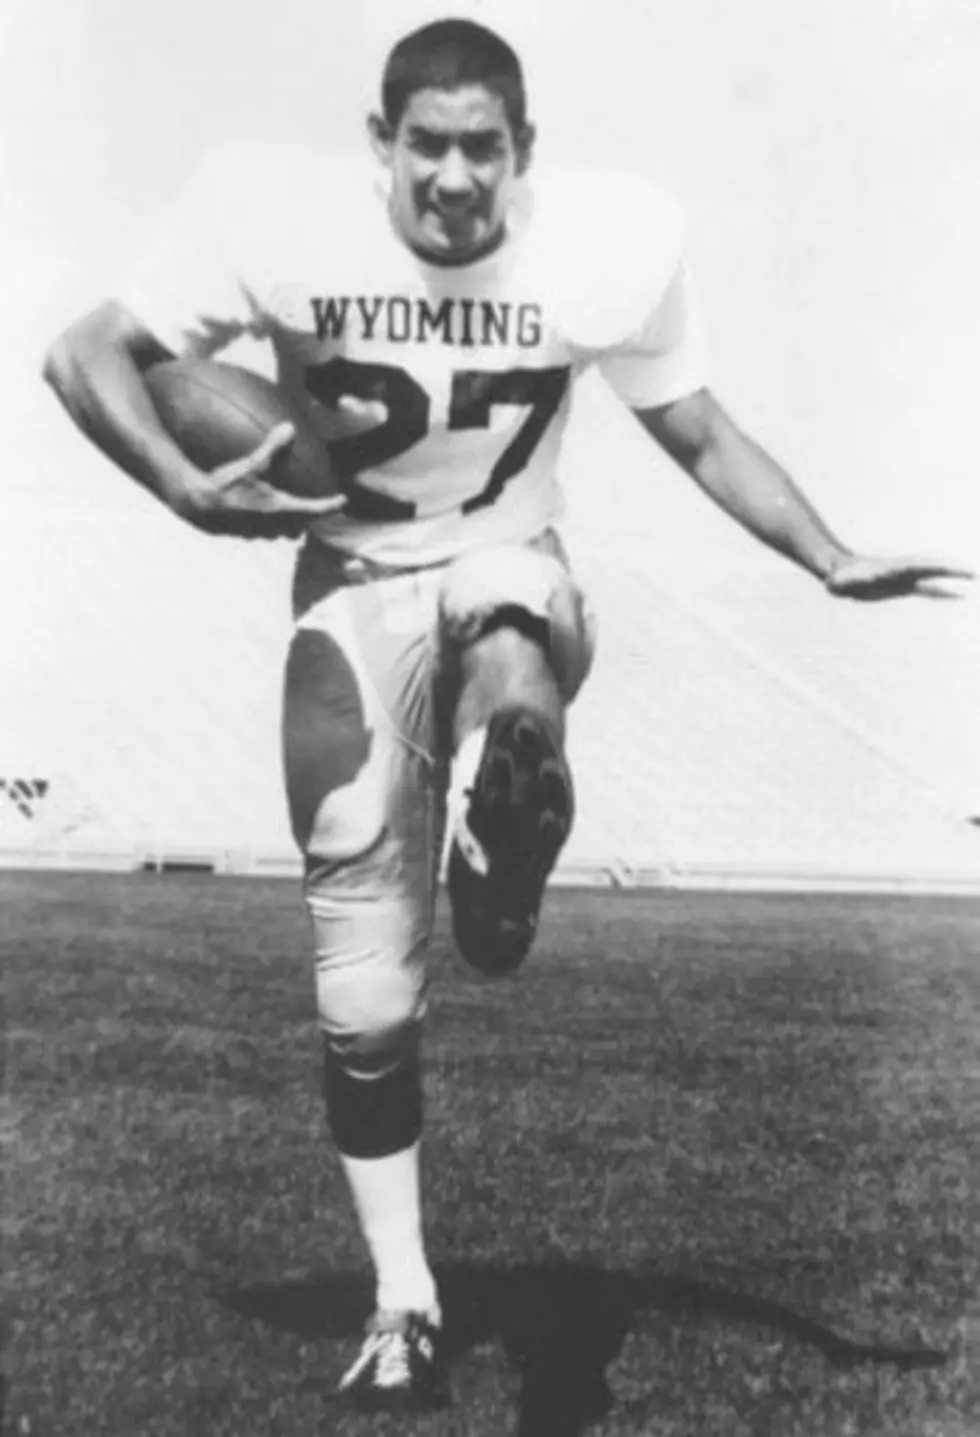 Which Wyoming Cowboy wore it best? No. 27